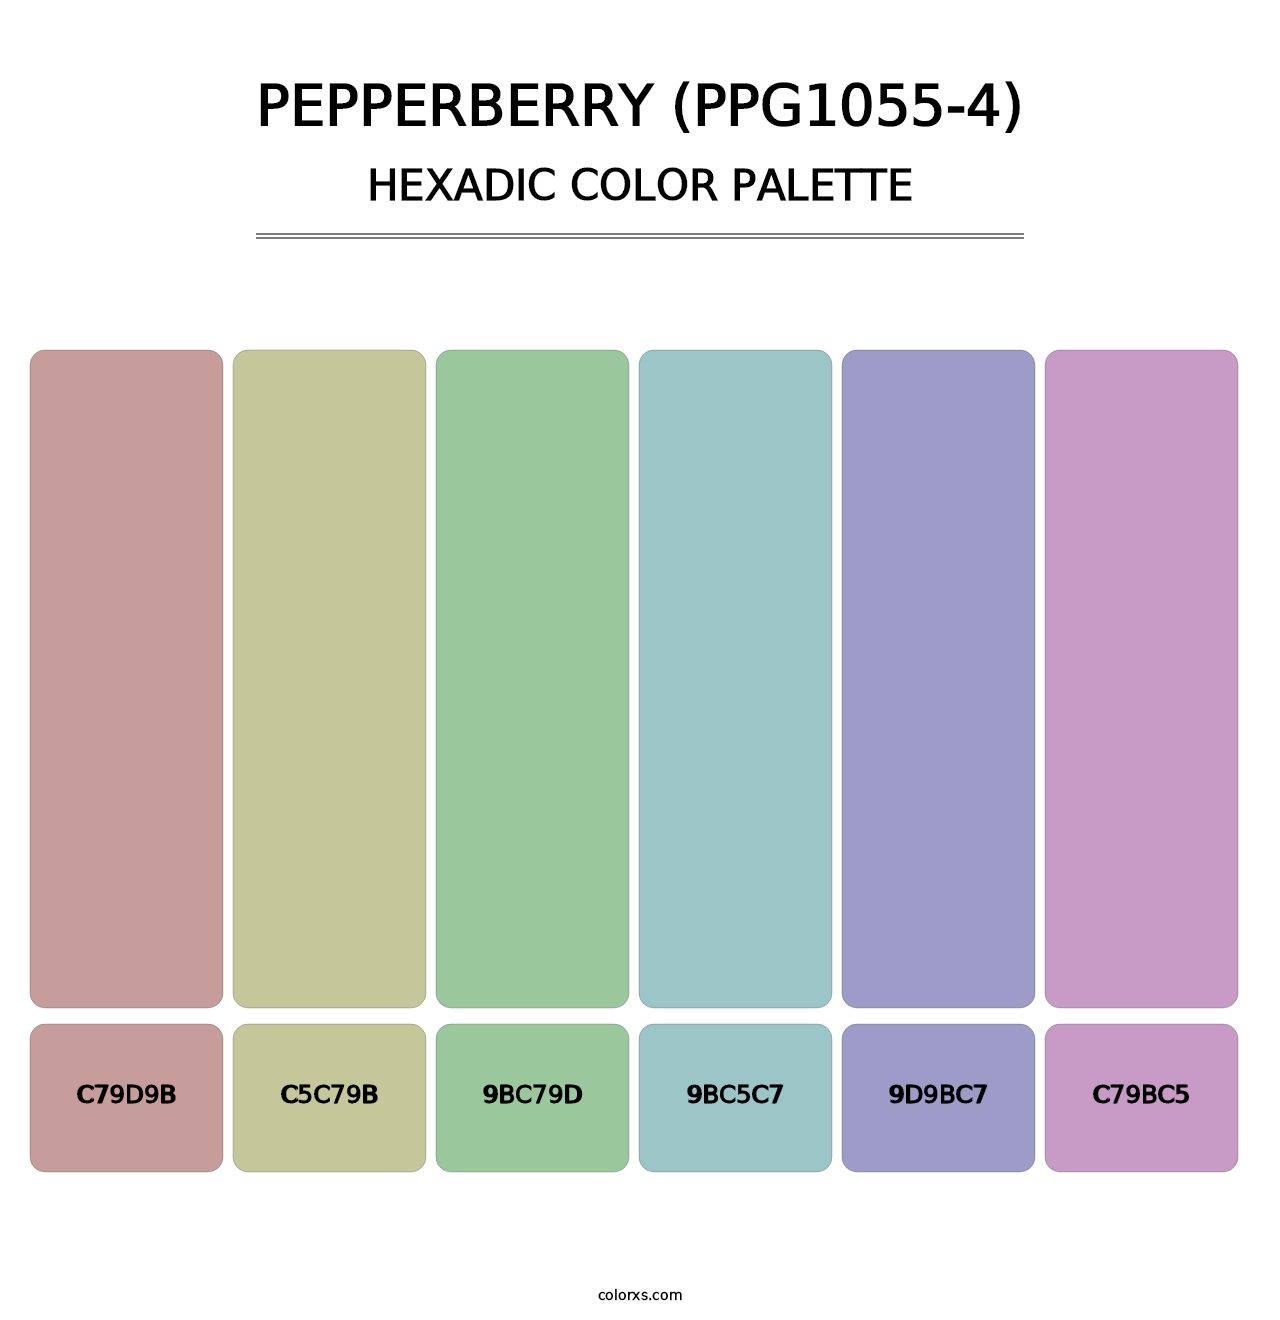 Pepperberry (PPG1055-4) - Hexadic Color Palette